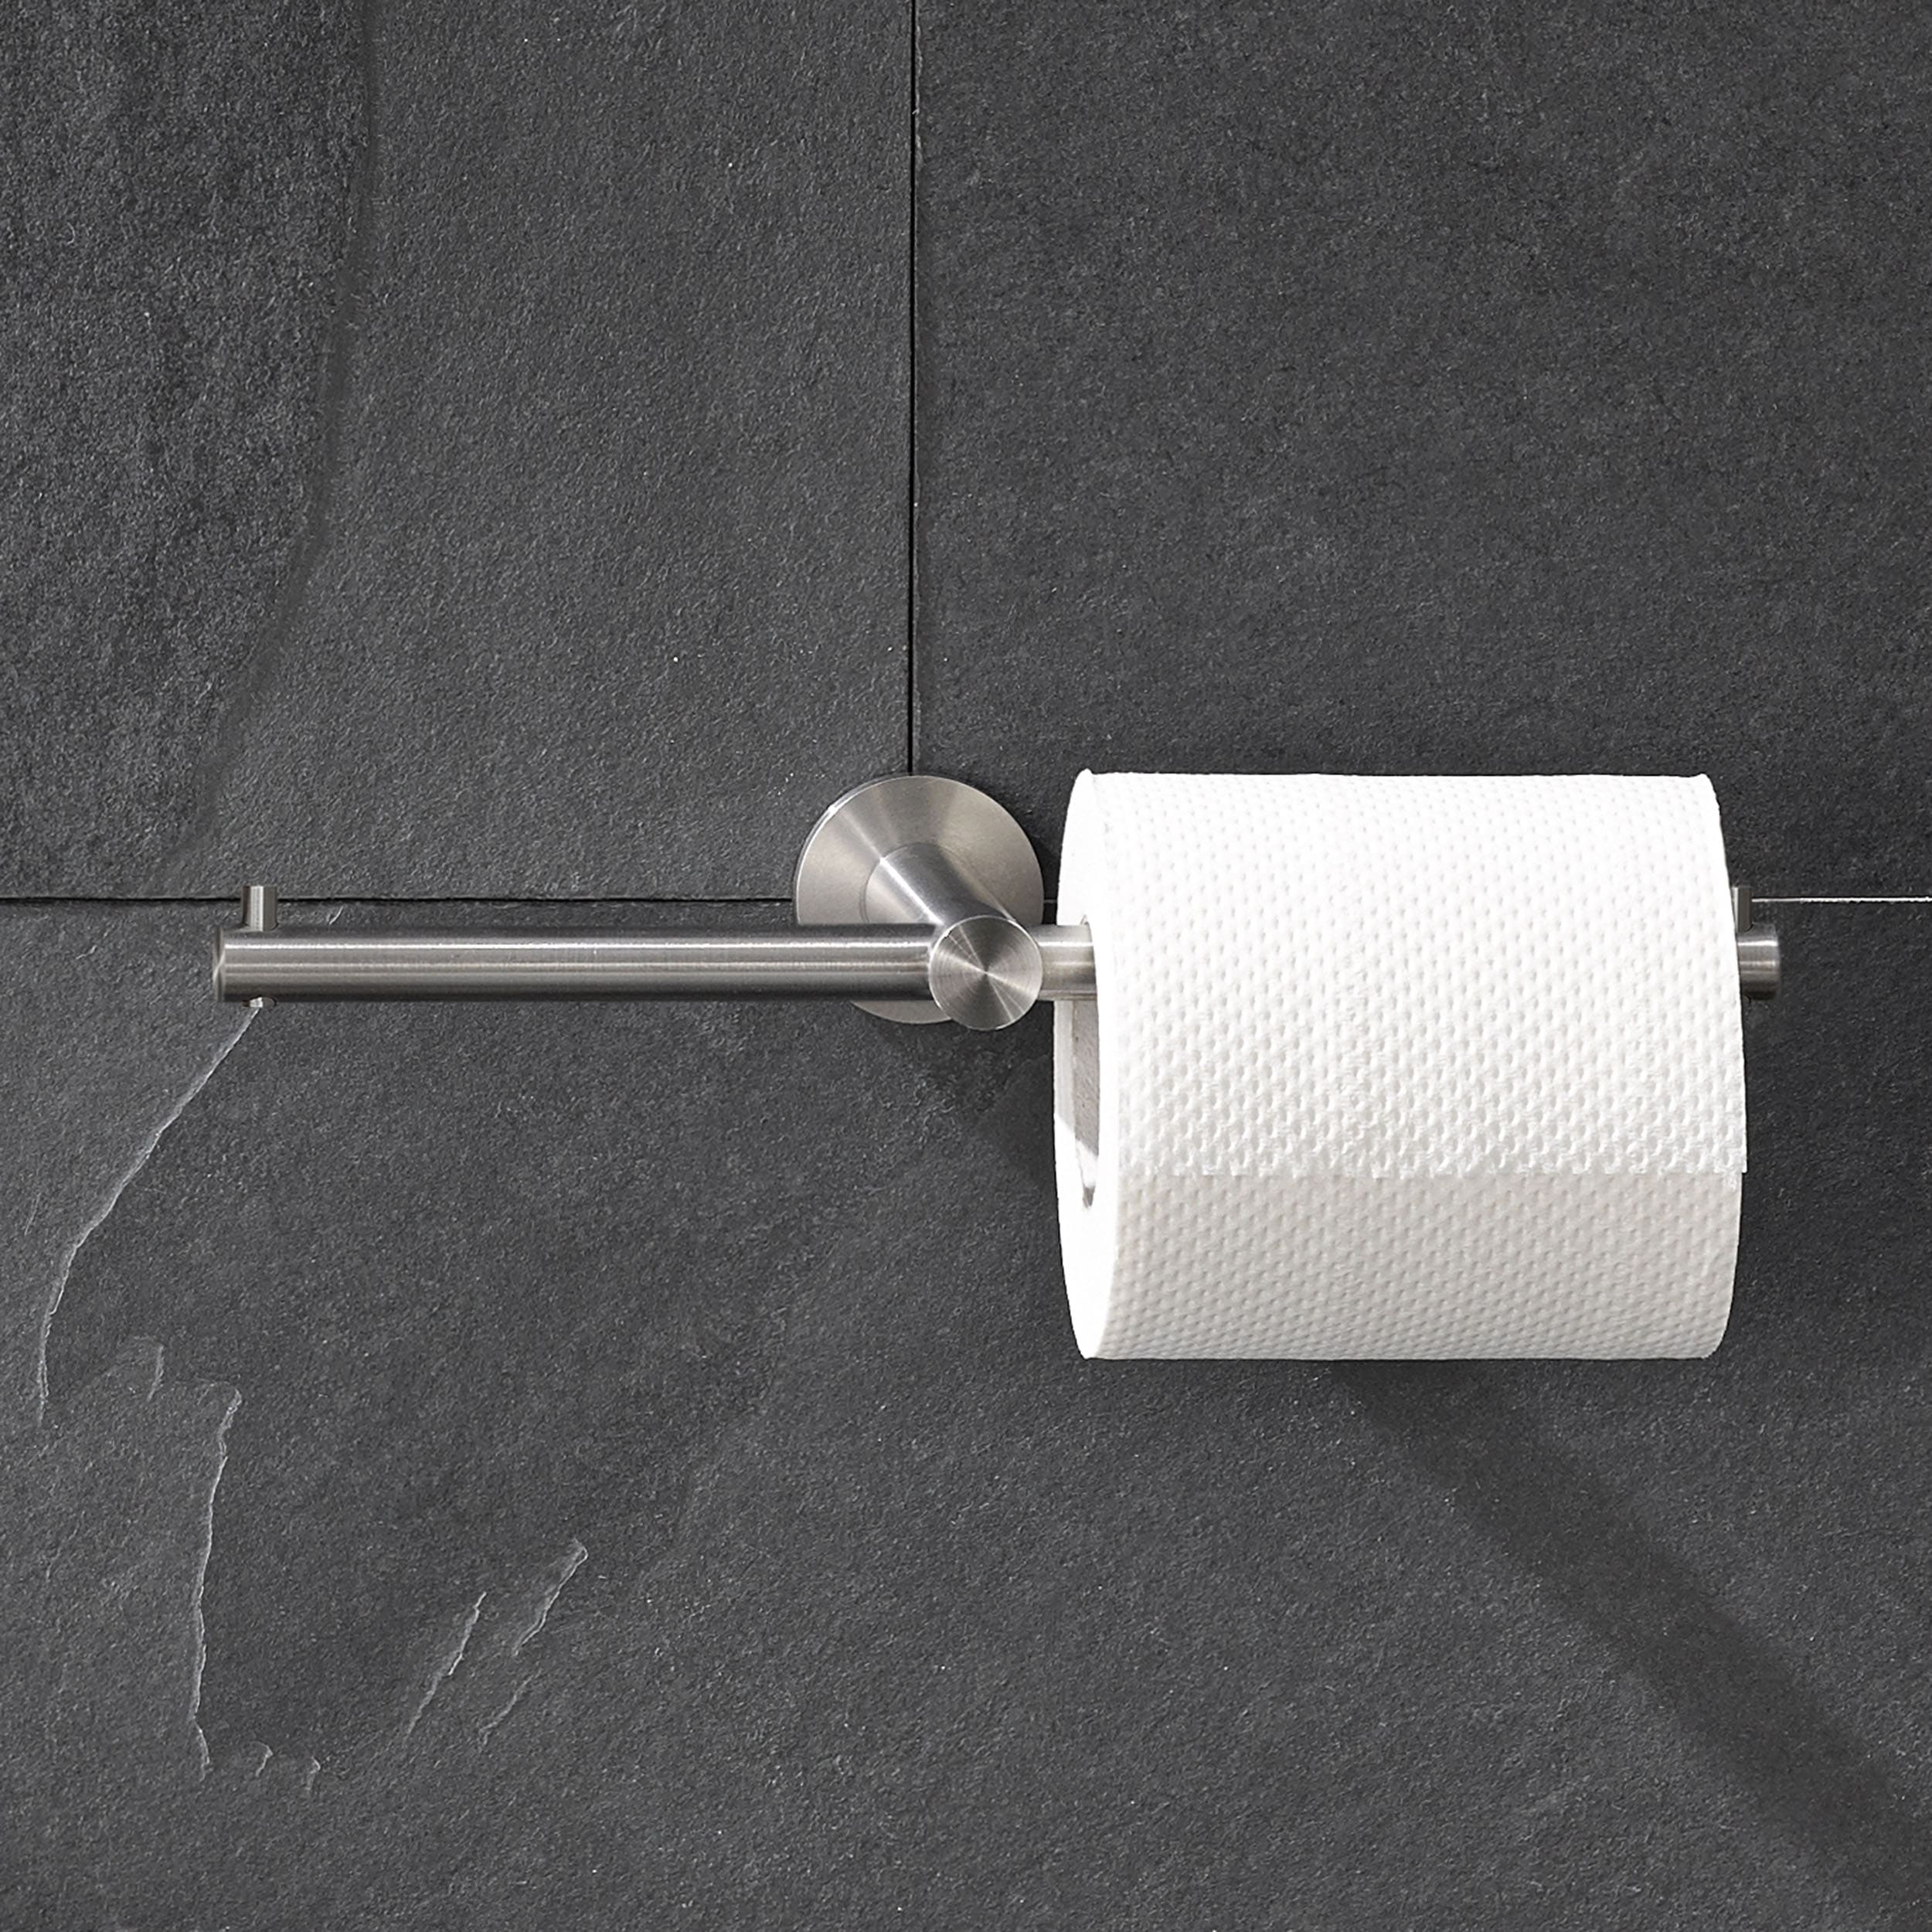 hochwertig Edelstahl PHOS Design Reserverollenhalter Toilettenpapierhalter 